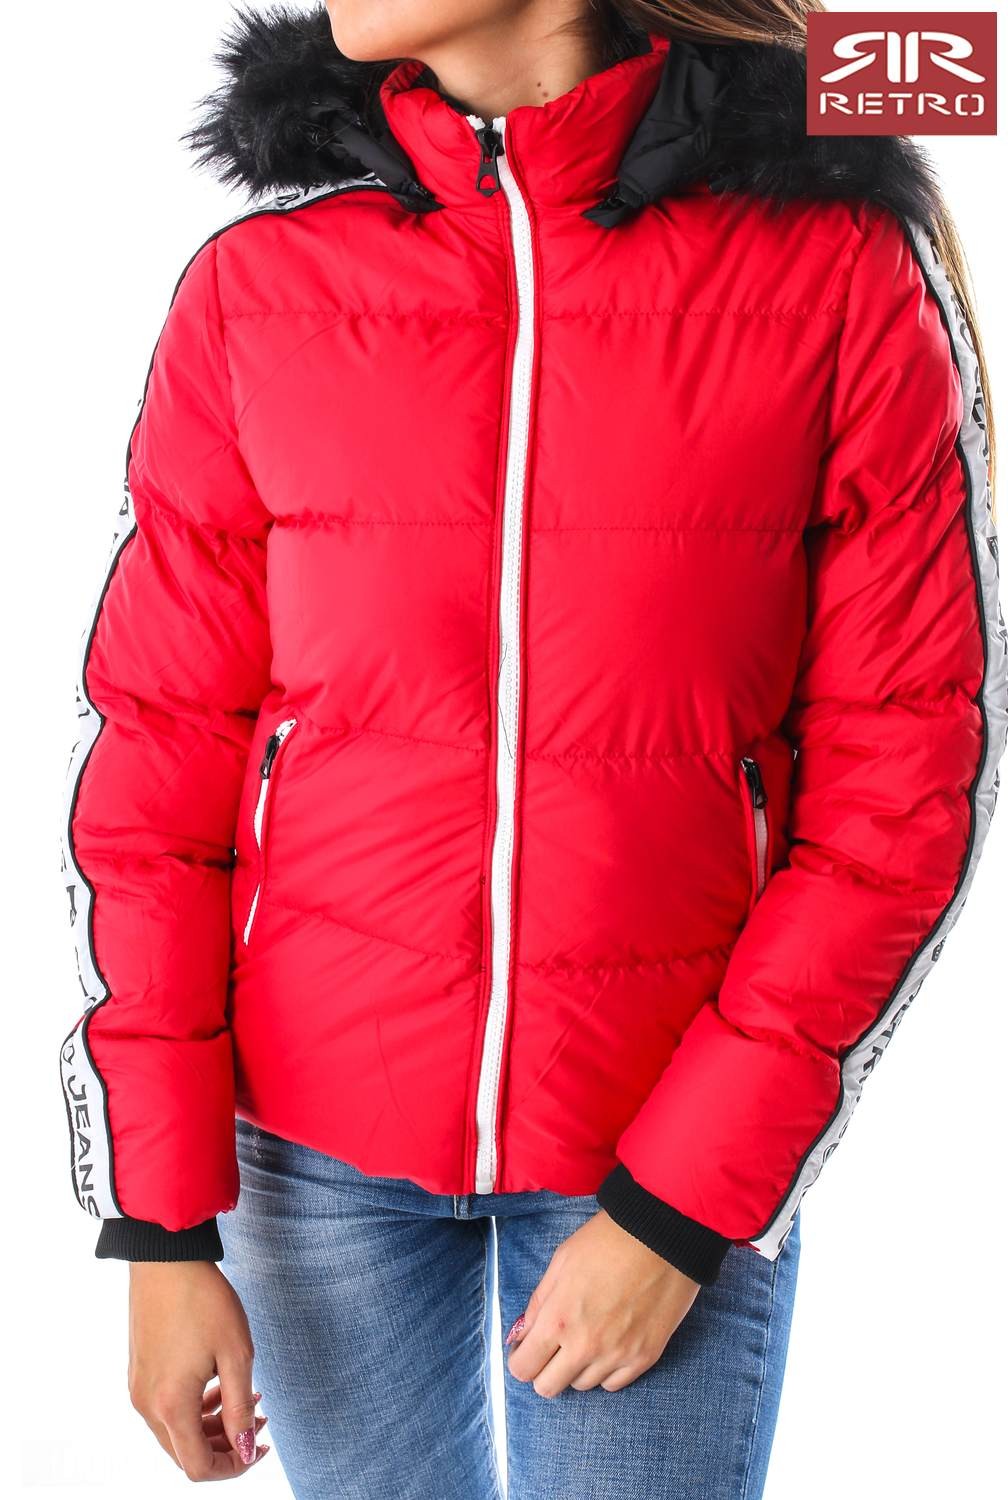 البلعوم الجاسوس المرصد  RetroJeans női kabát (Maria Jacket) 7302 | Retro női kabátok - RetroJeans  Női